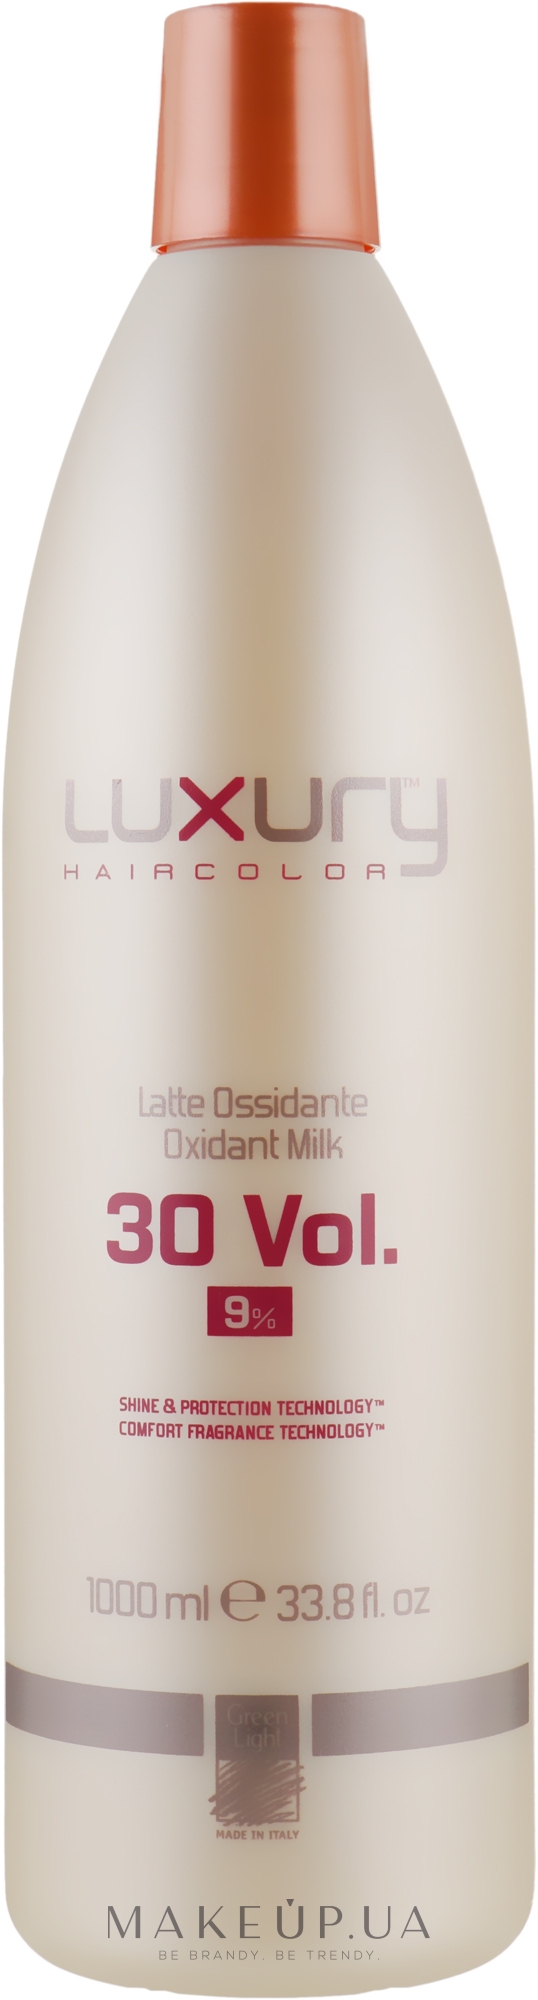 Молочний Оксидант - Green Light Luxury Haircolor Oxidant Milk 9% 30 vol. — фото 1000ml